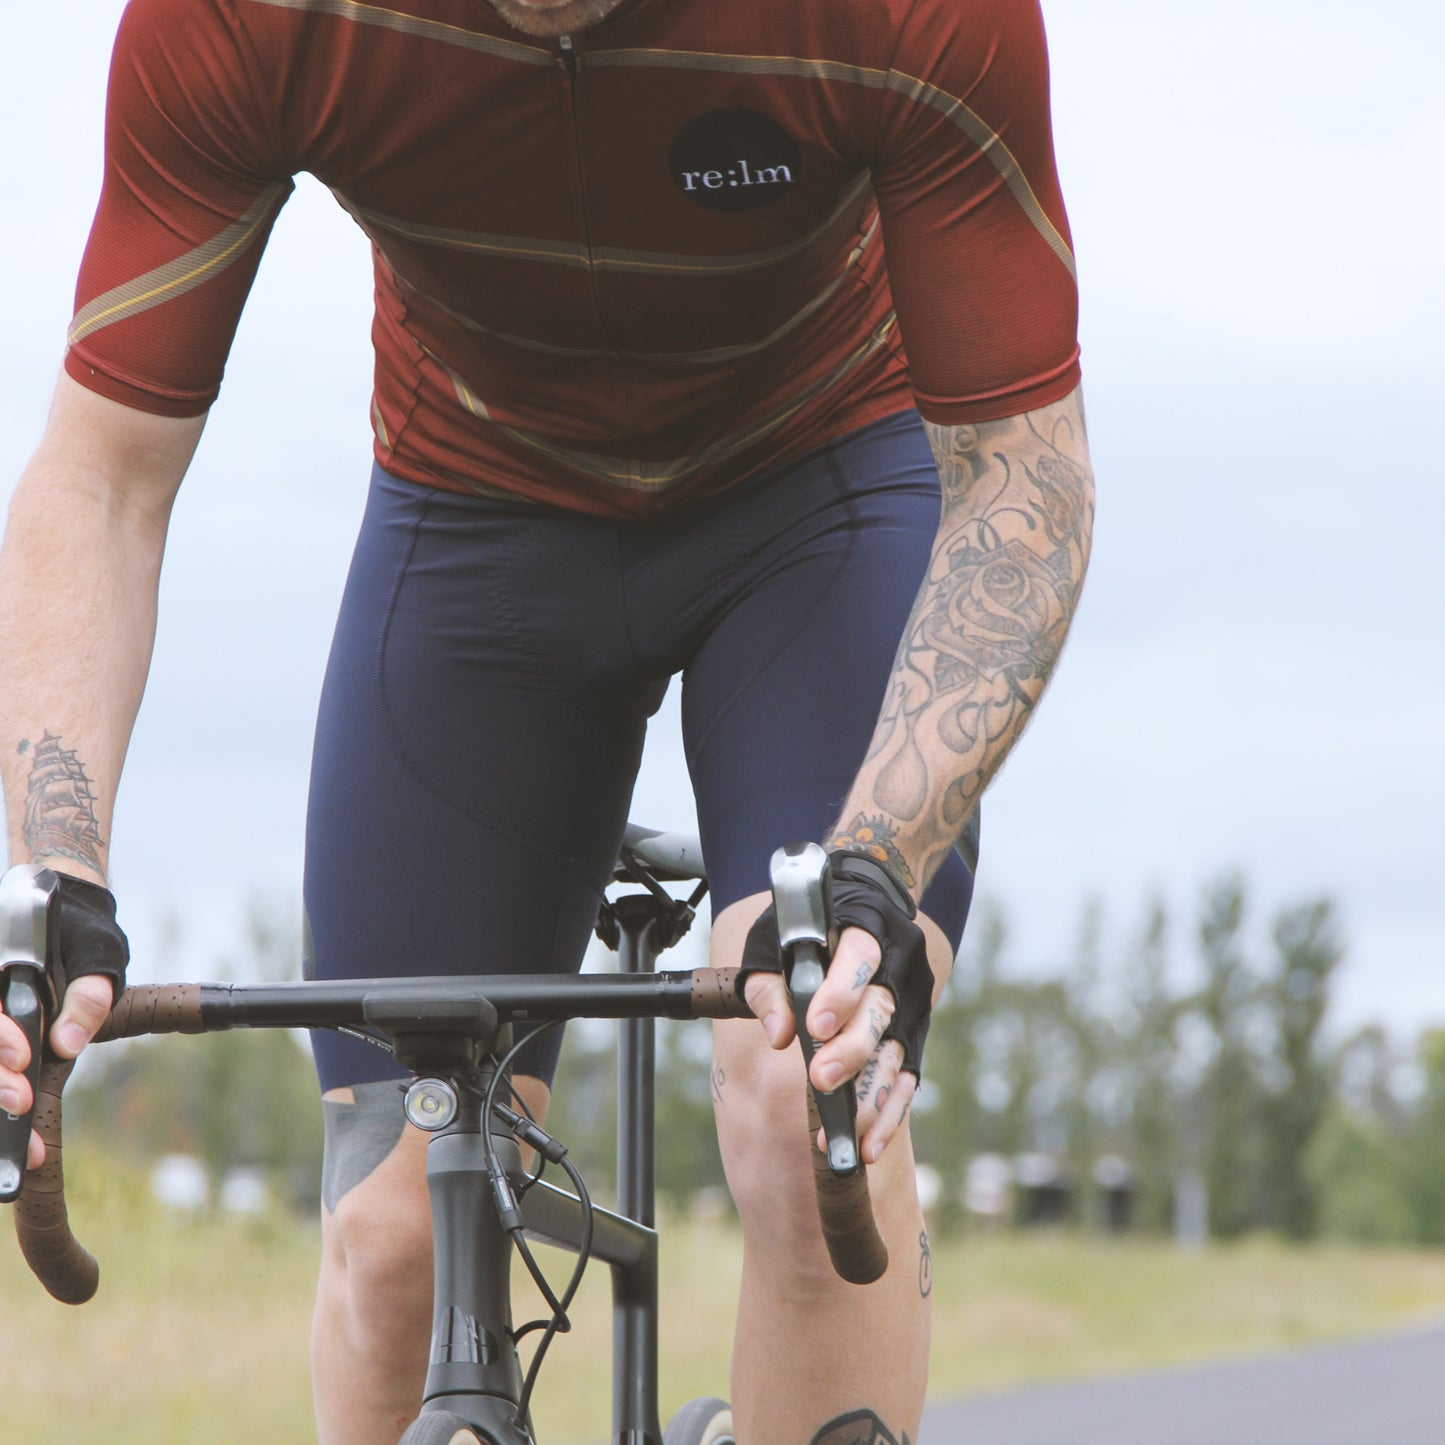 Man riding bike wearing Relm Cycling jersey in offset